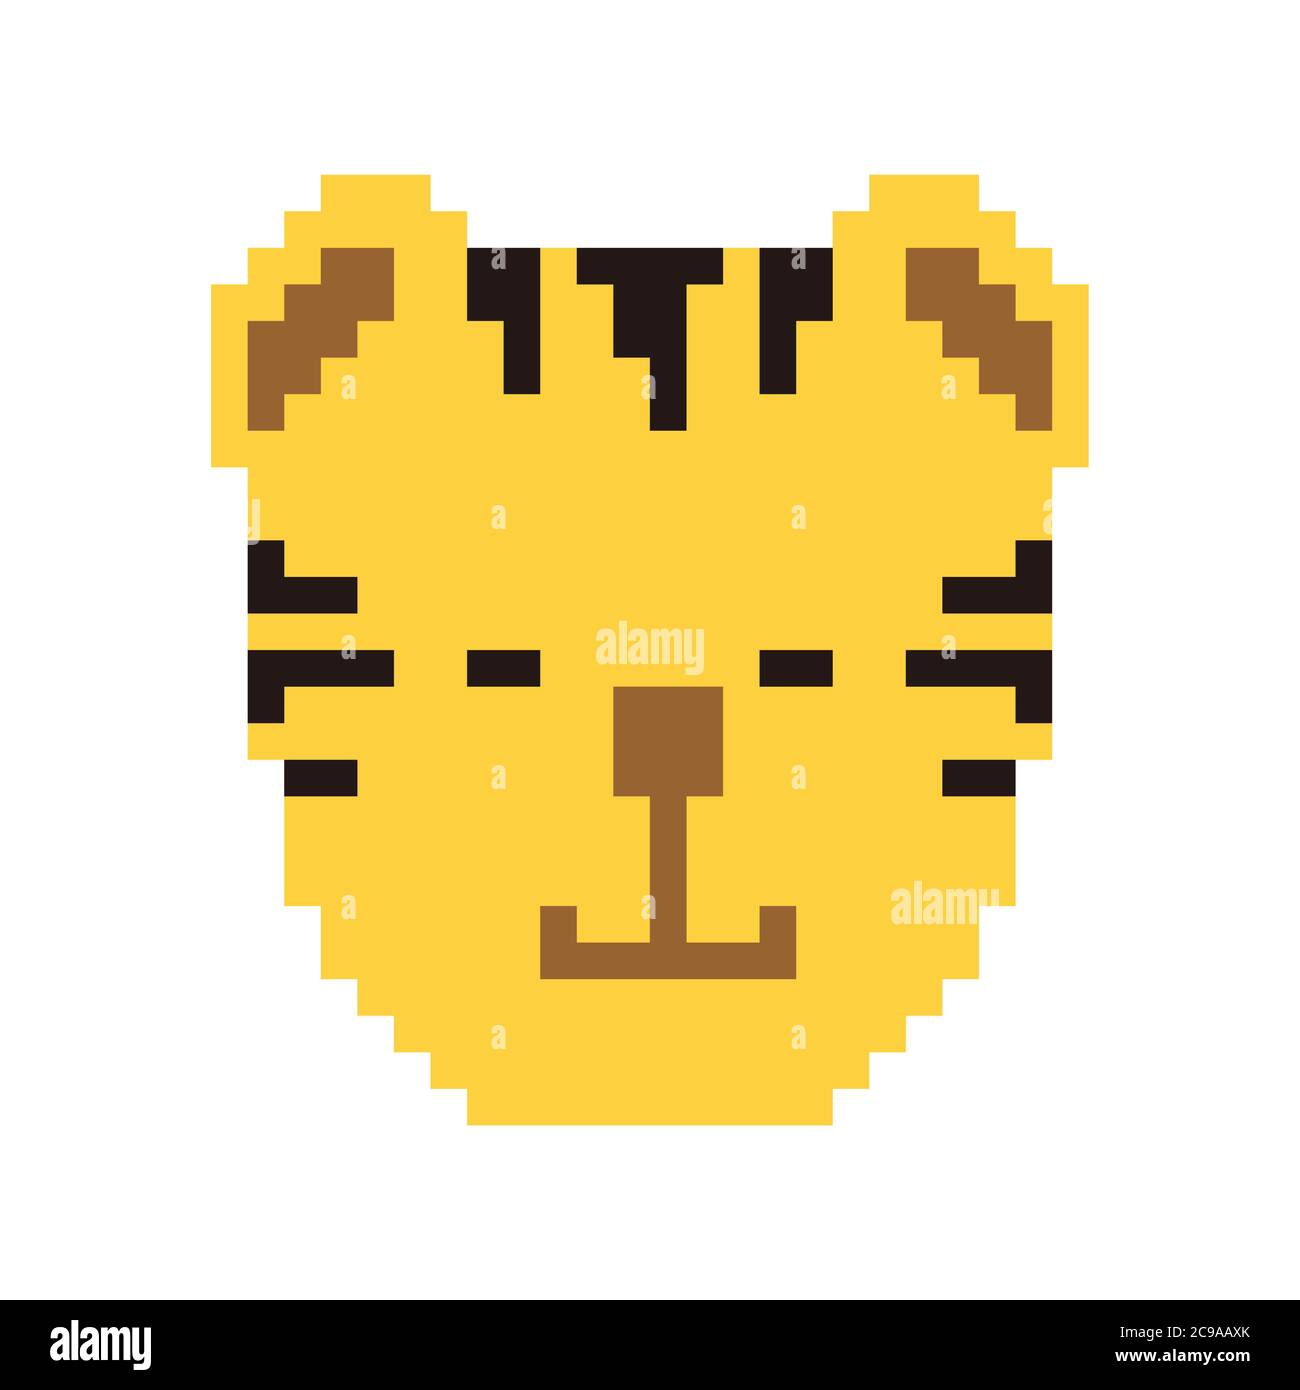 Pixilart - gato pixelado by Anonymous